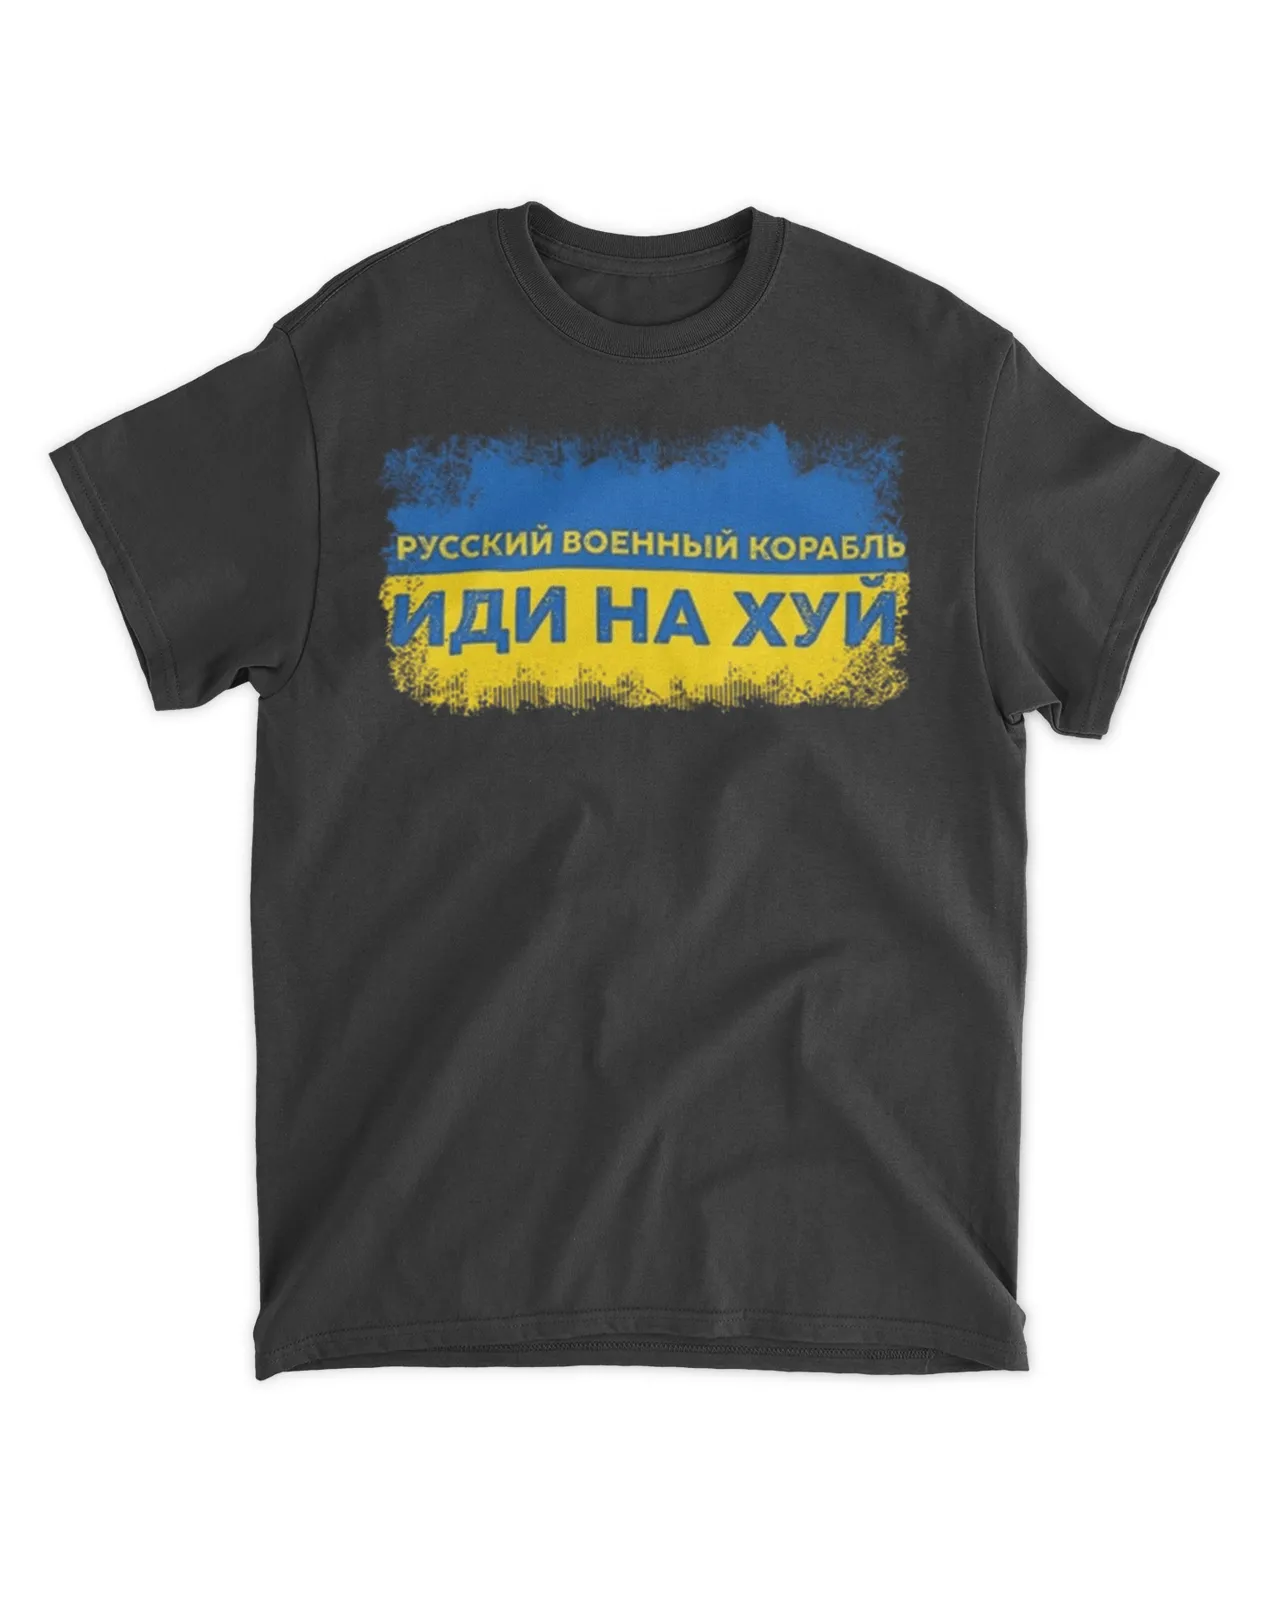 Ukrainian Patriot Russian Warship Go F Yourself Shirt Unisex Standard T-Shirt black 